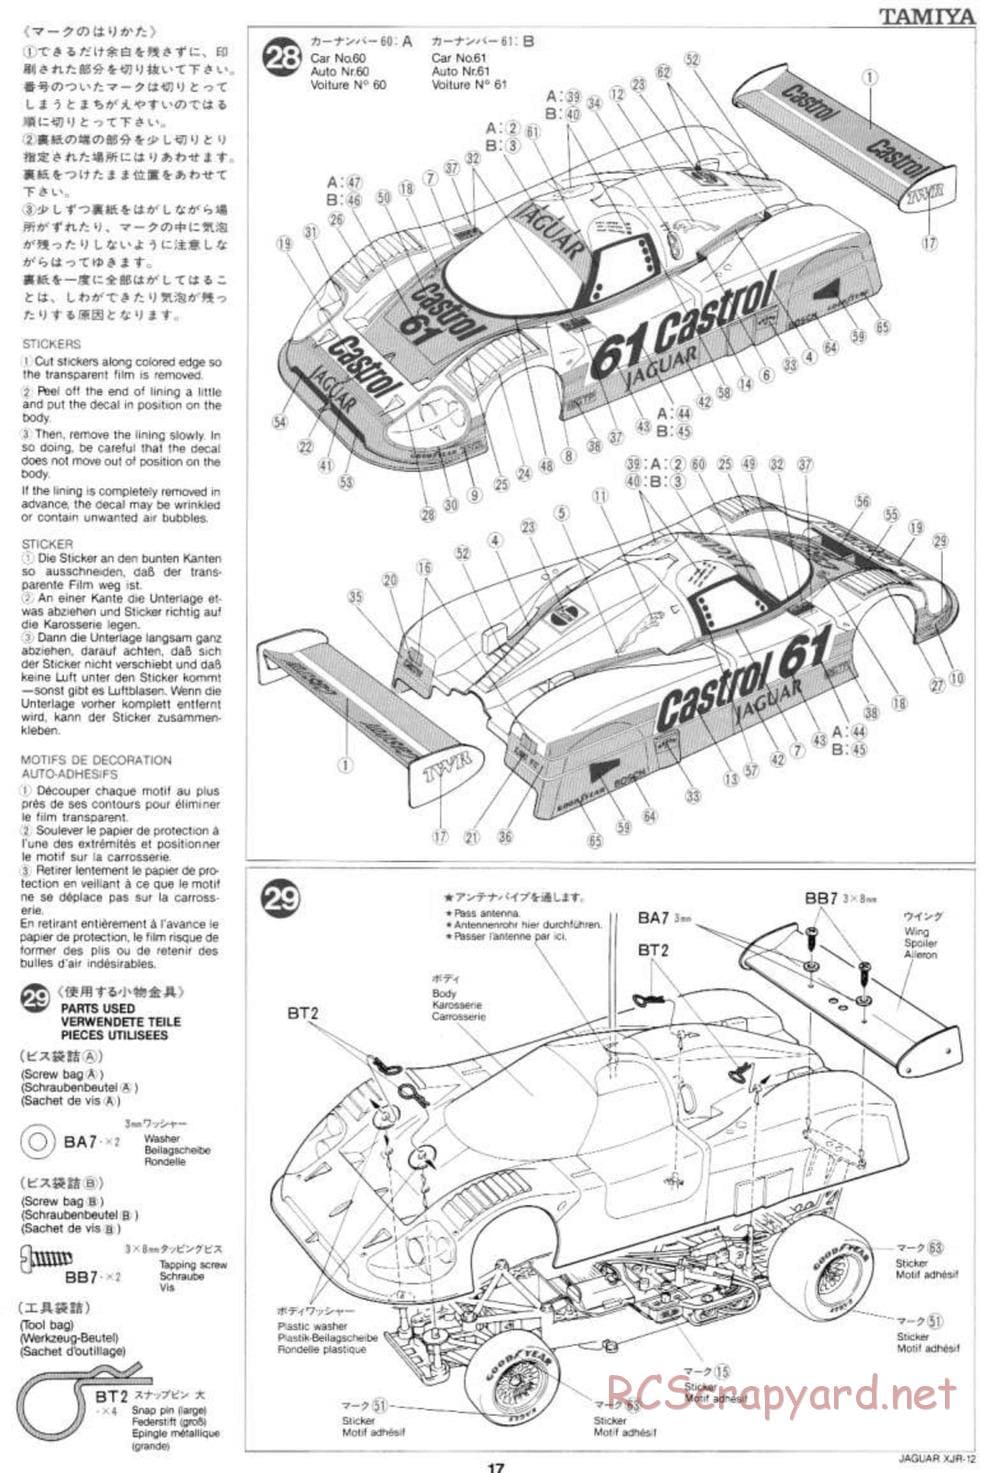 Tamiya - Jaguar XJR-12 Daytona Winner - Group-C Chassis - Manual - Page 17